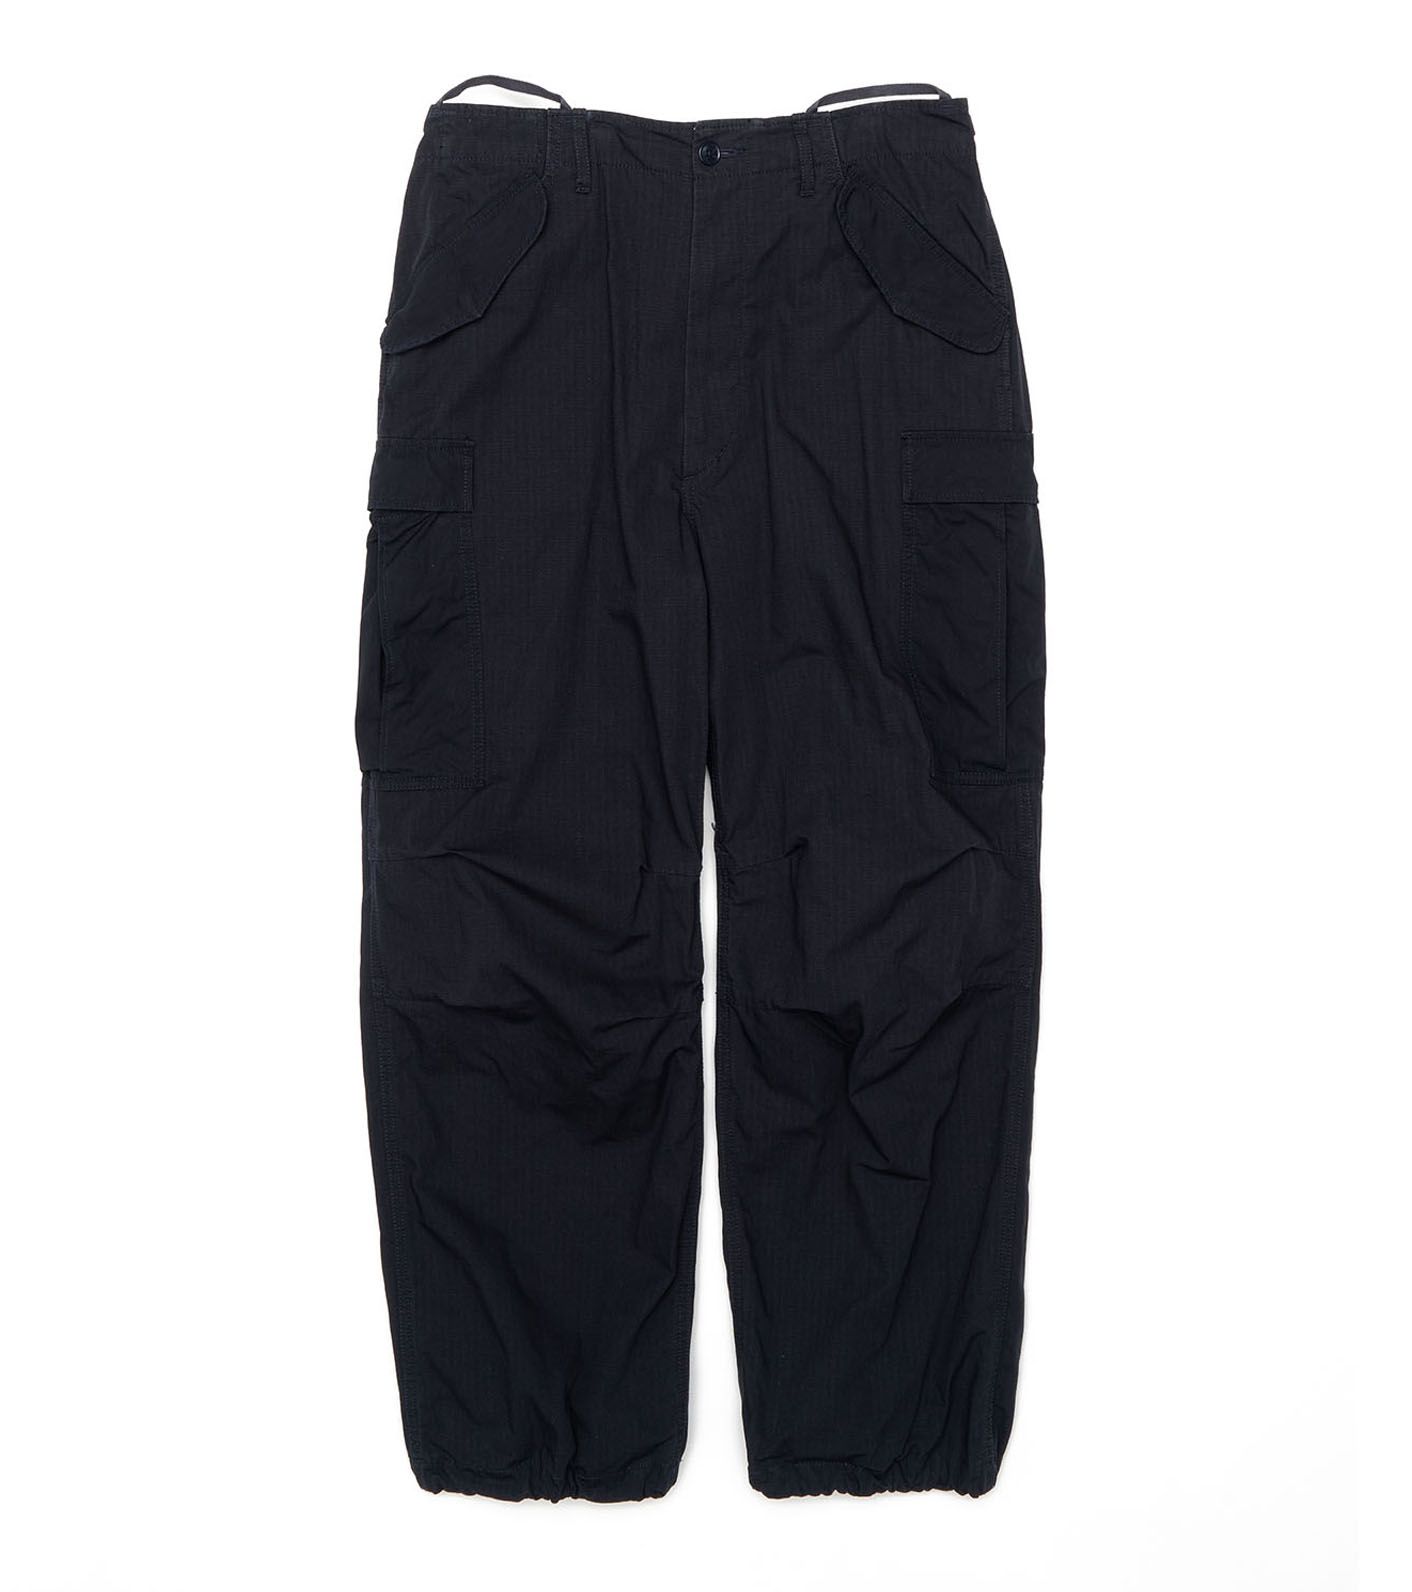 nanamica - Wide Chino Pants / N(Navy) | Stripe Online Store